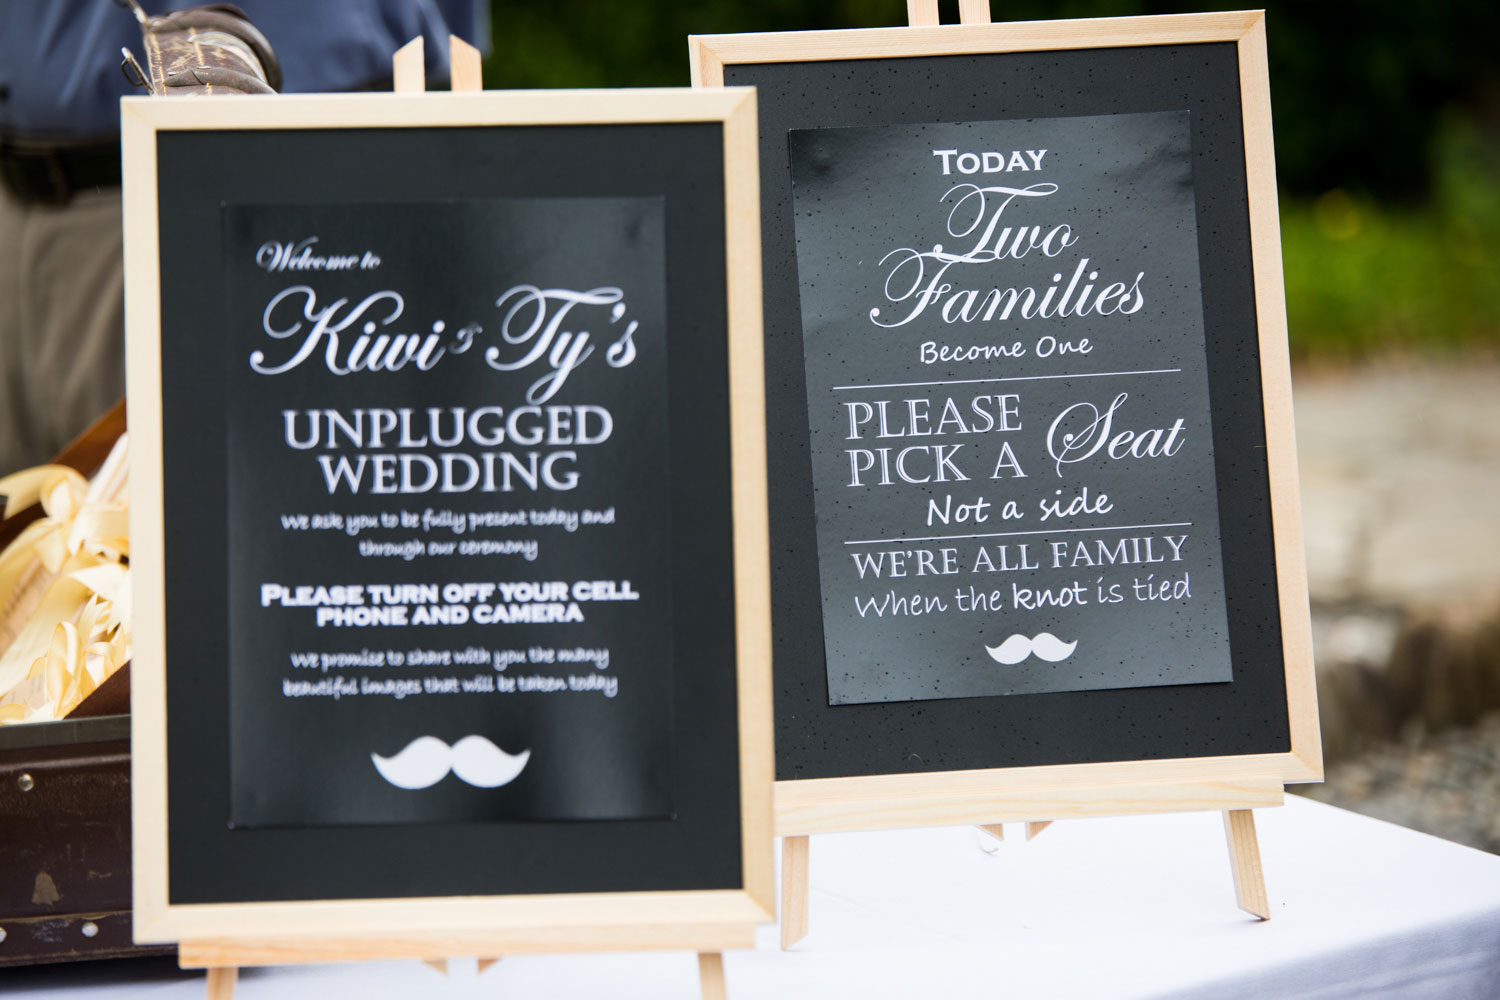 auckland wedding signs